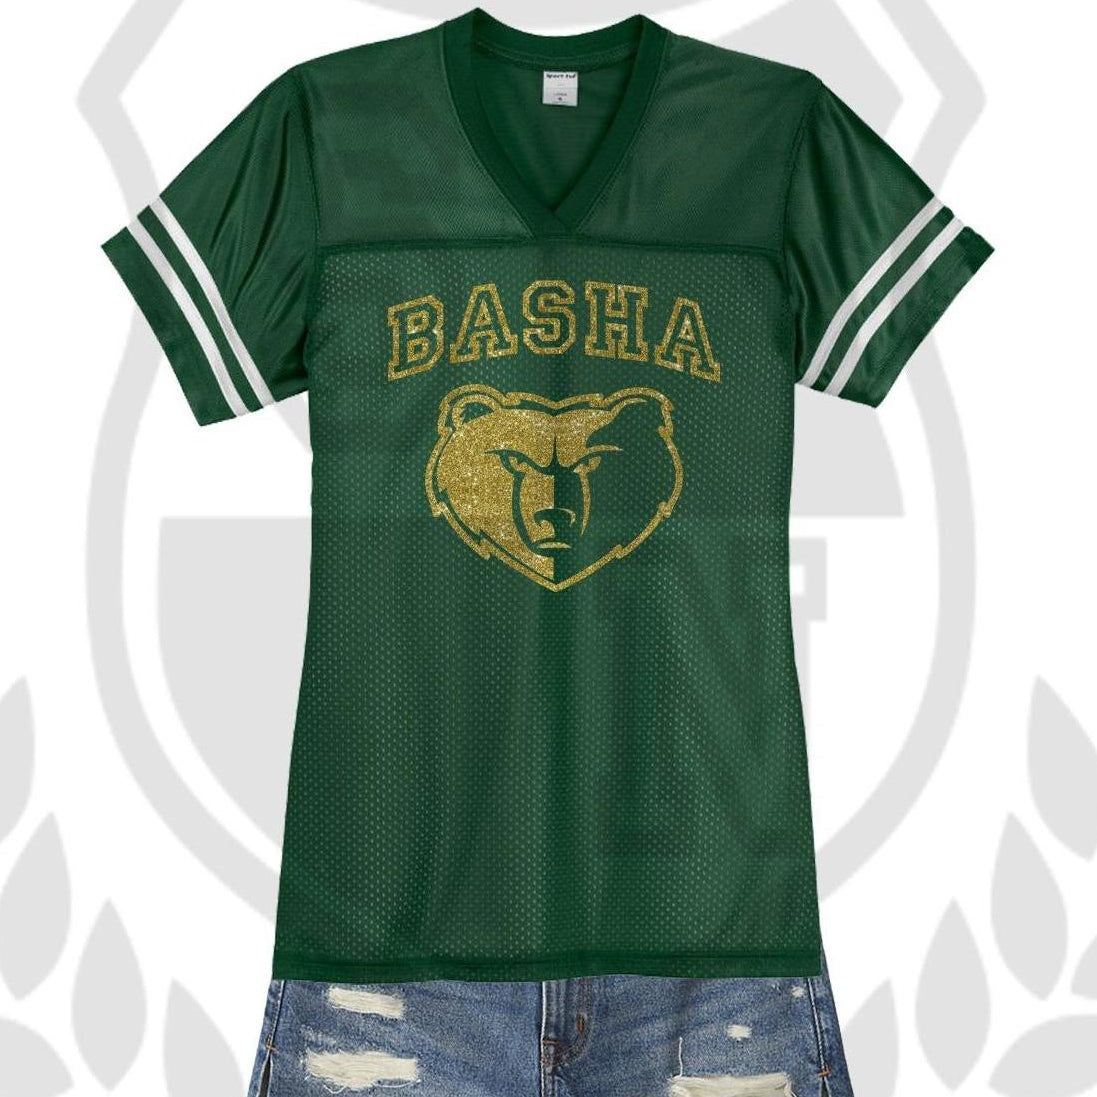 basha bears football jersey